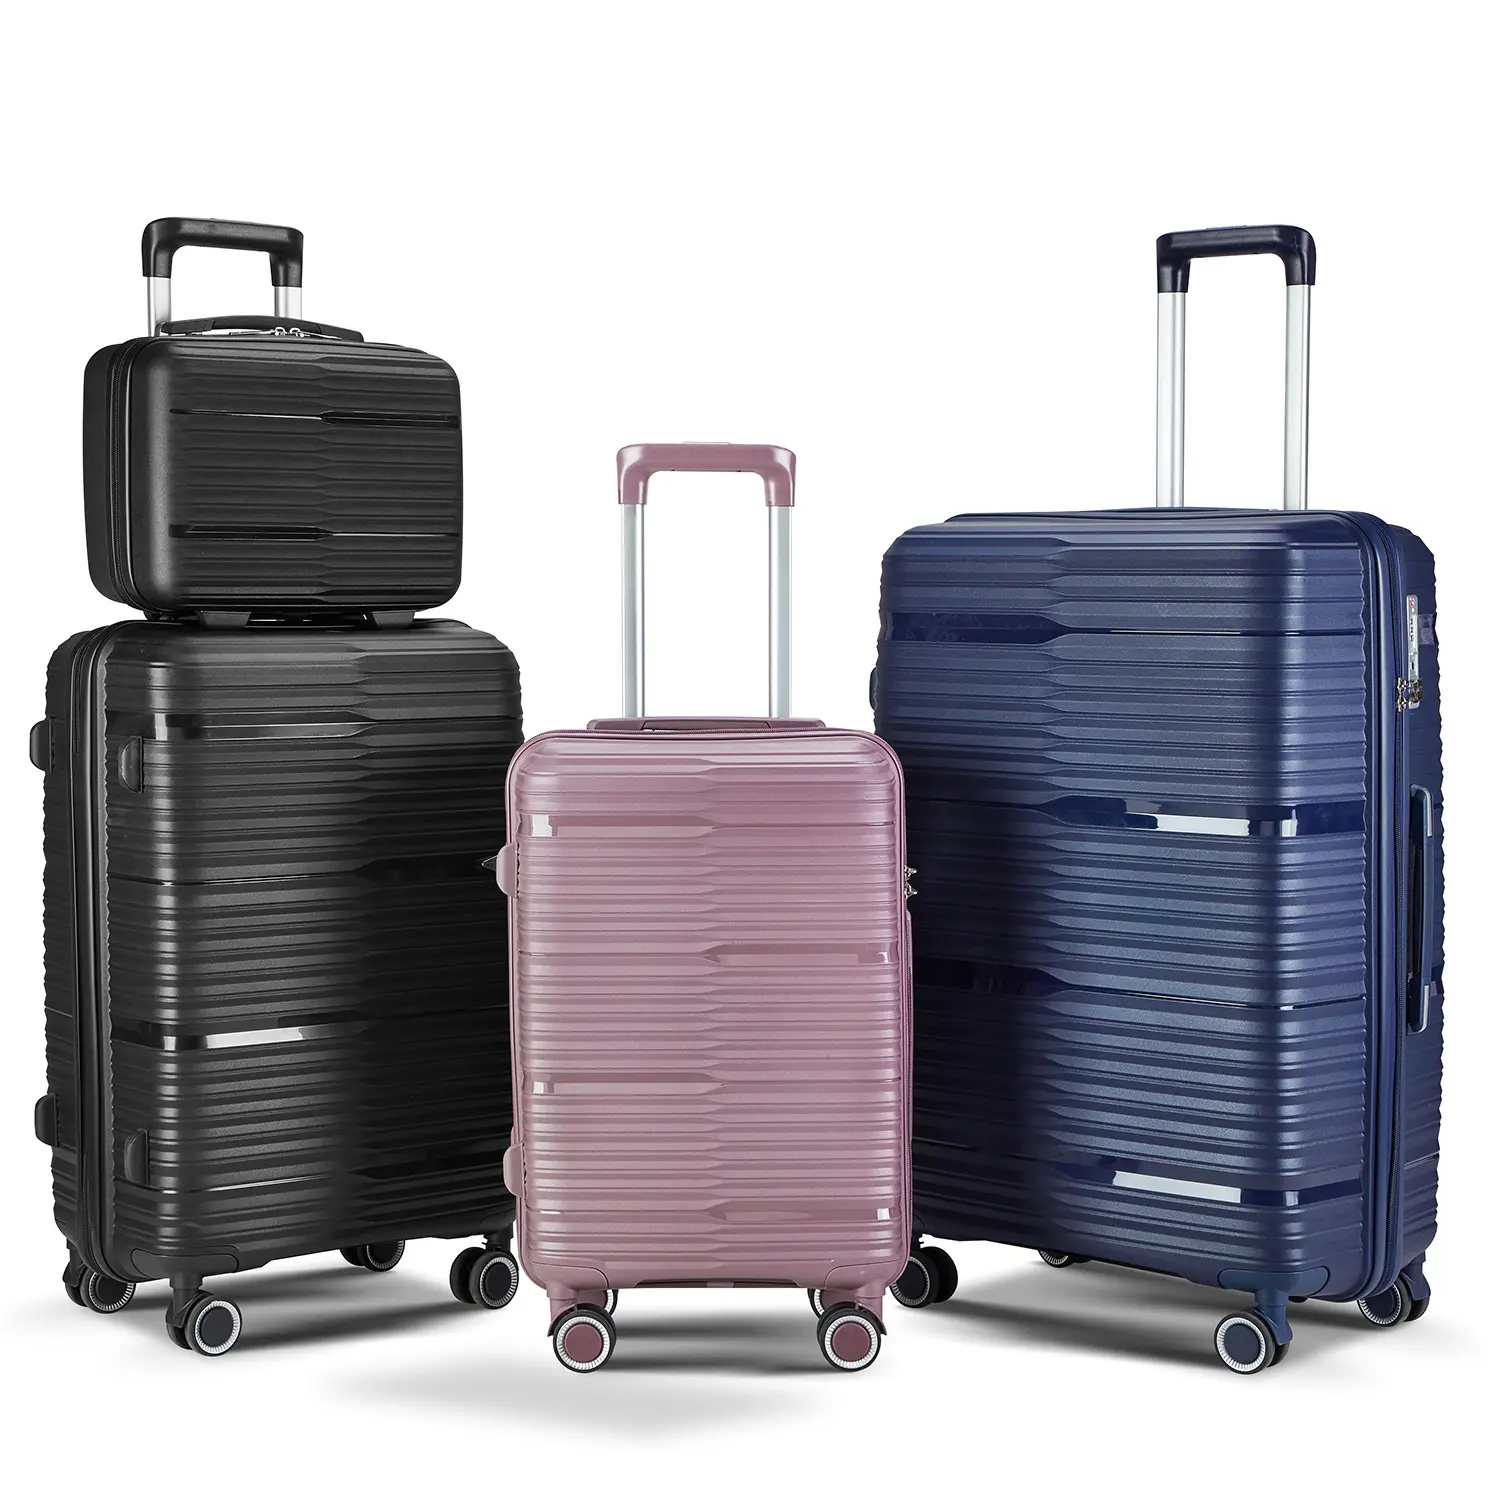 थोक कस्टम यात्रा पीपी सूटकेस सामान बैग दैनिक जीवन के लिए विशिष्ट व्यक्तित्व सामान सेट